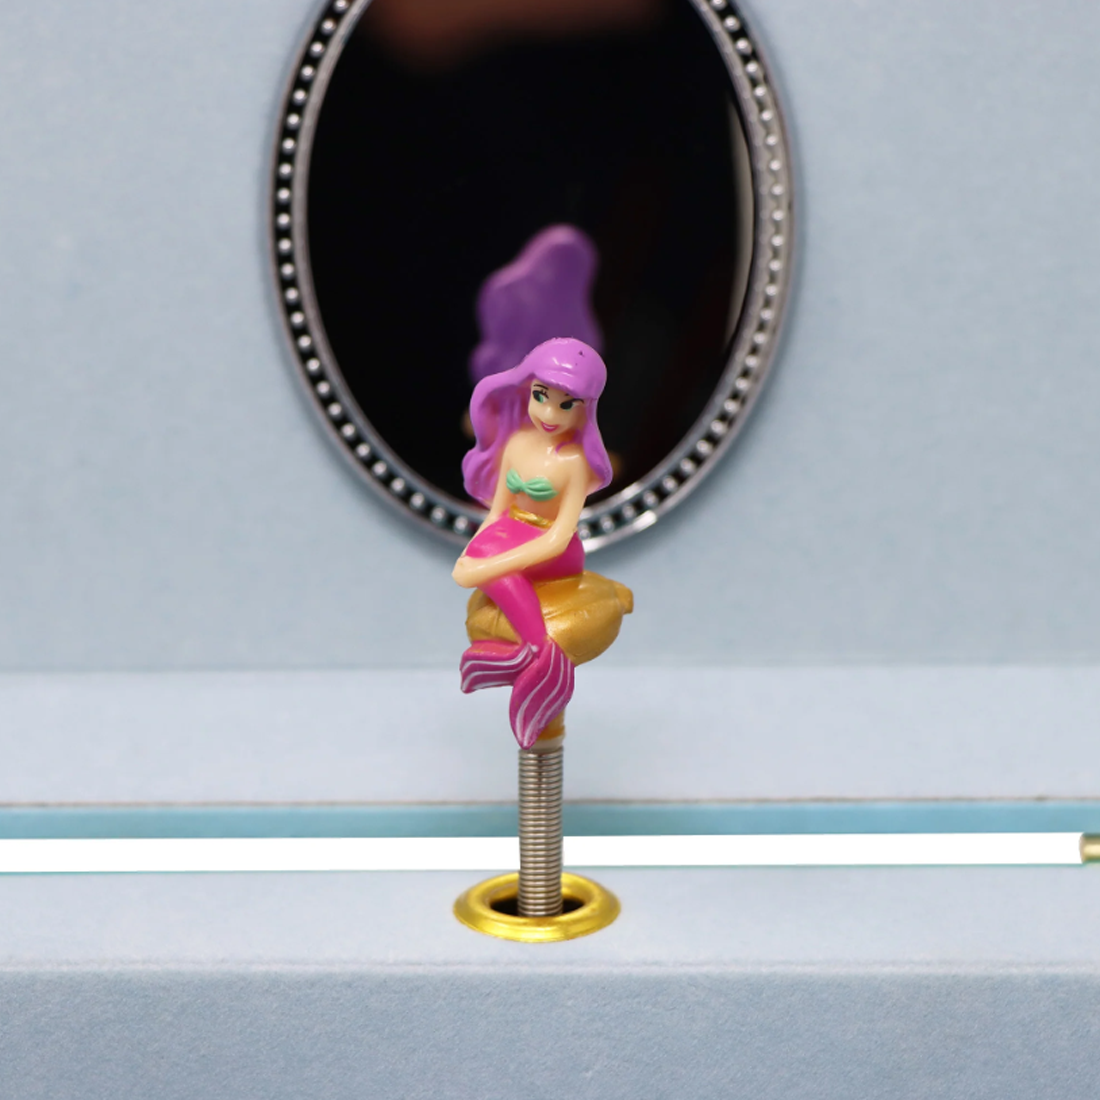 Shimmering Mermaid Musical Jewellery Box with Twirling Mermaid Figurine